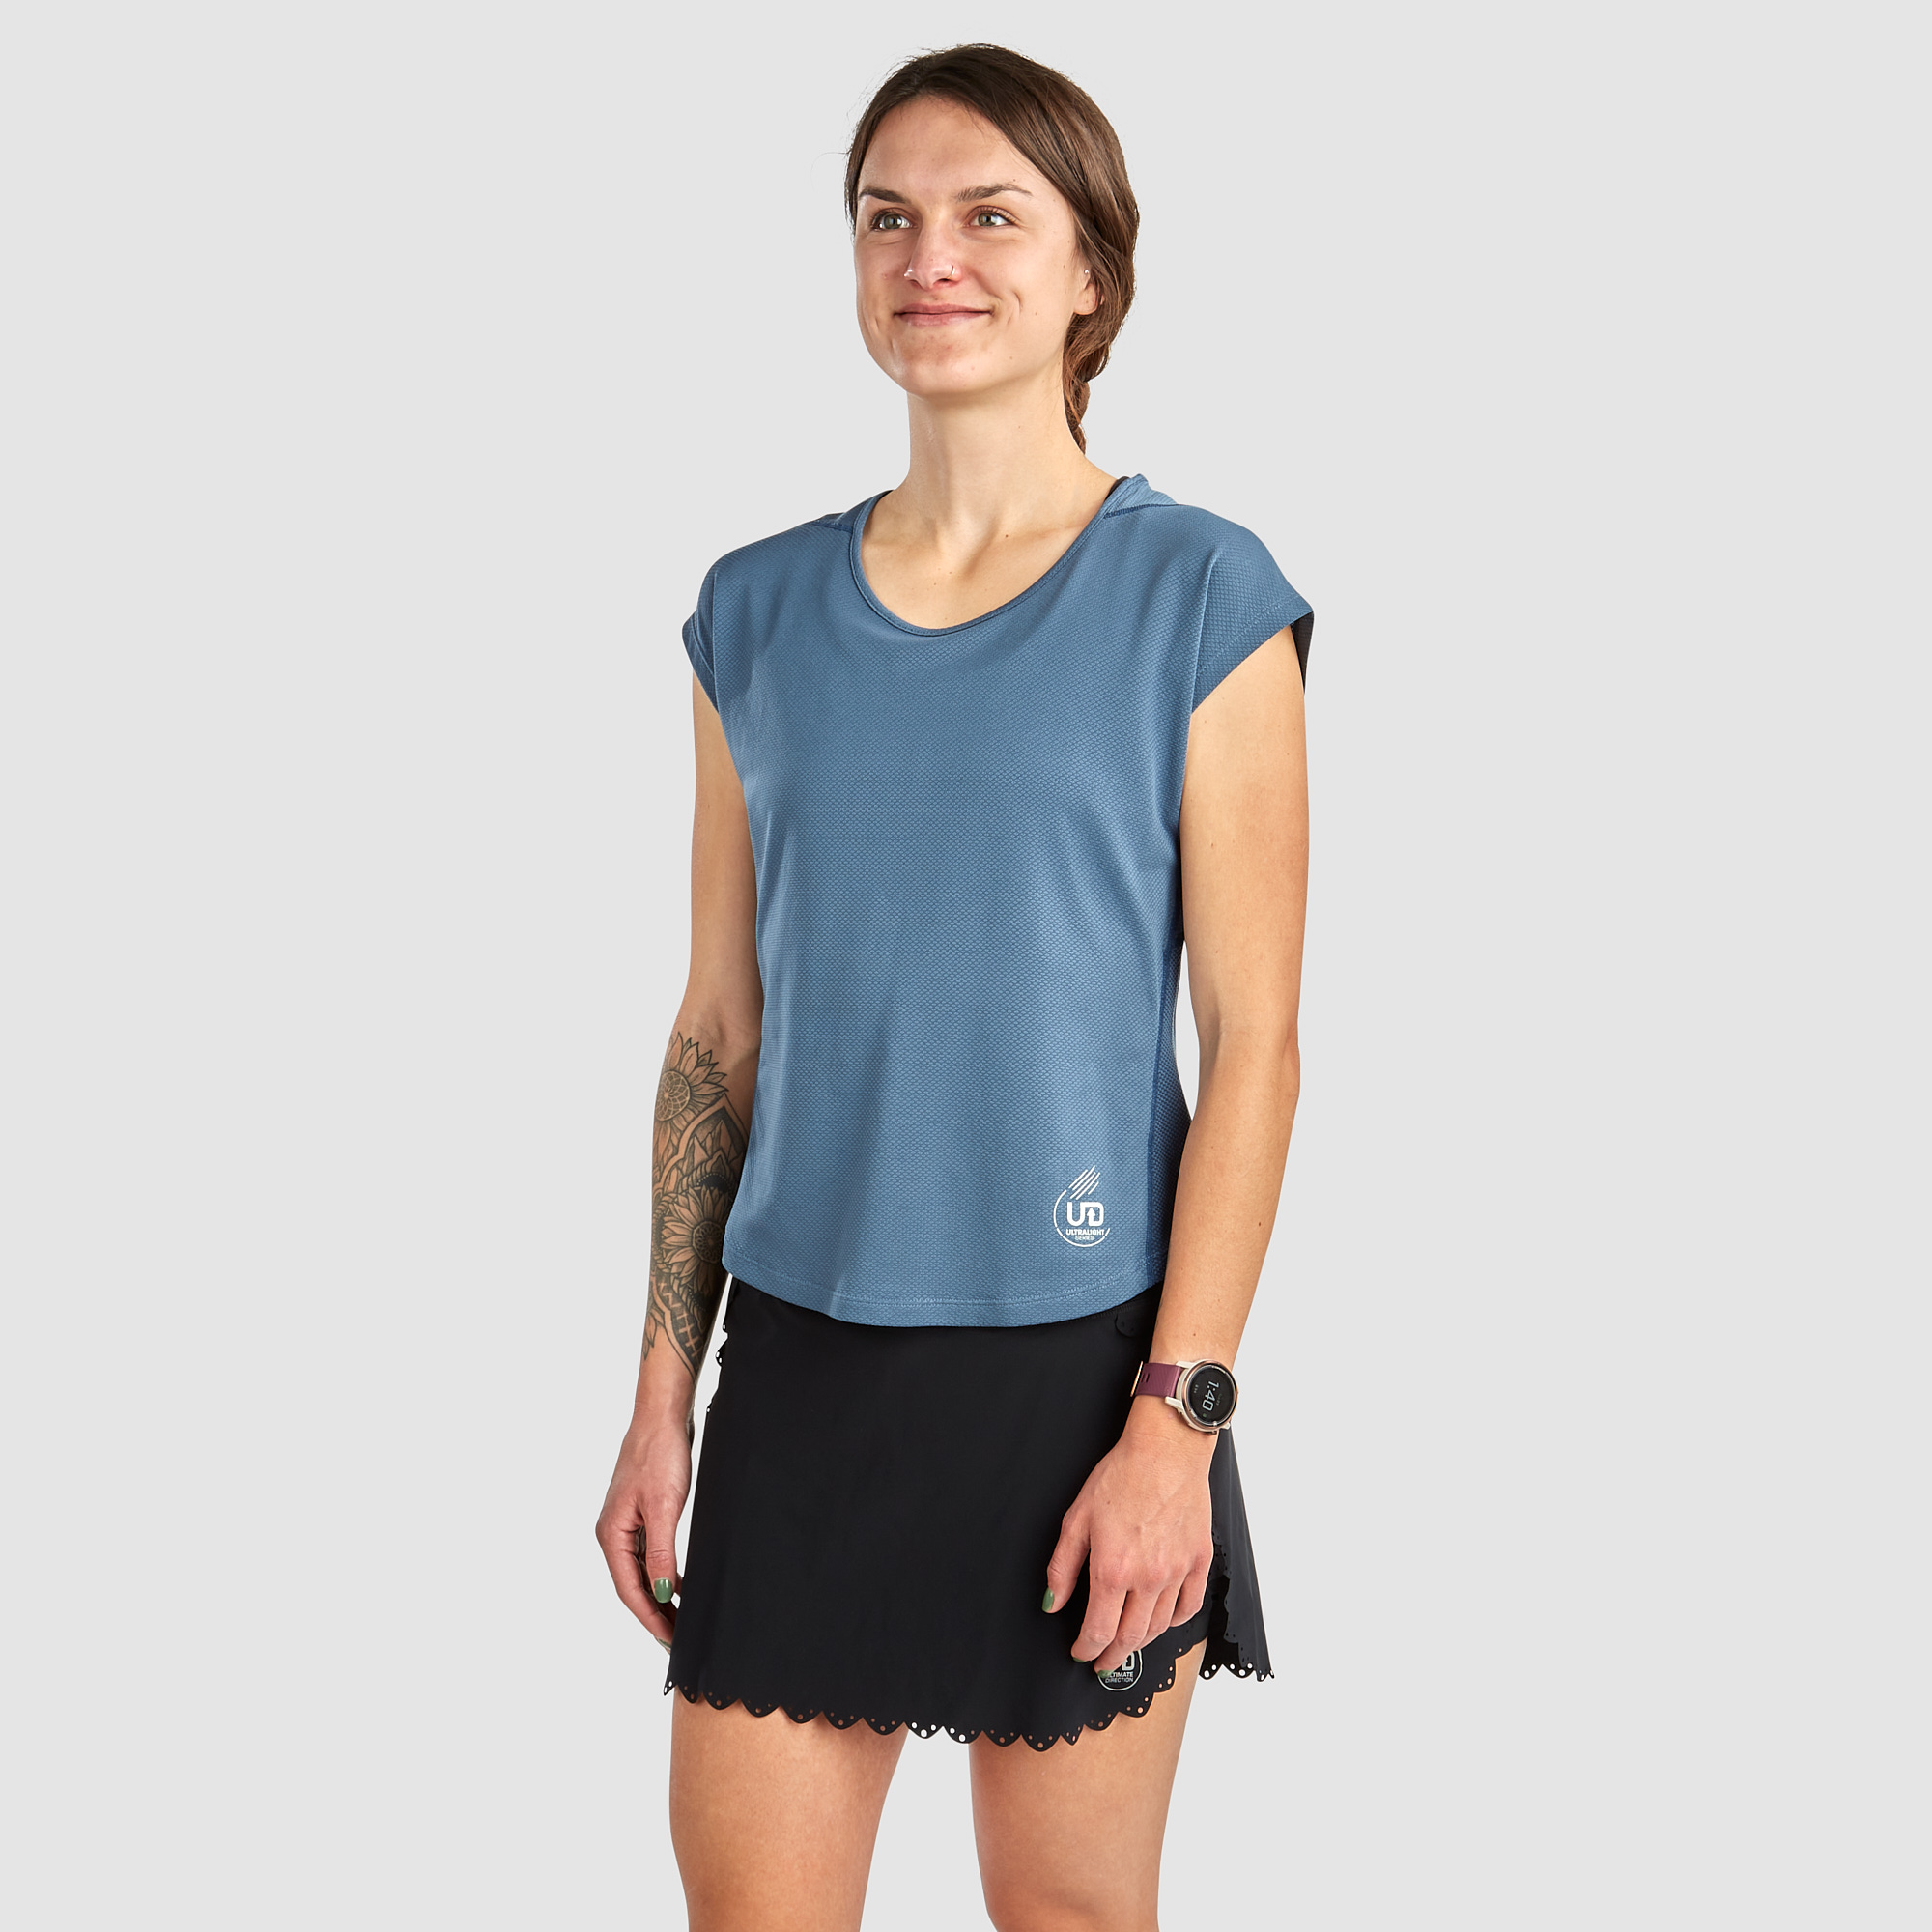 Ultimate Direction Women's Nimbus T-Shirt - Prior Year in Slate Blue Size Medium